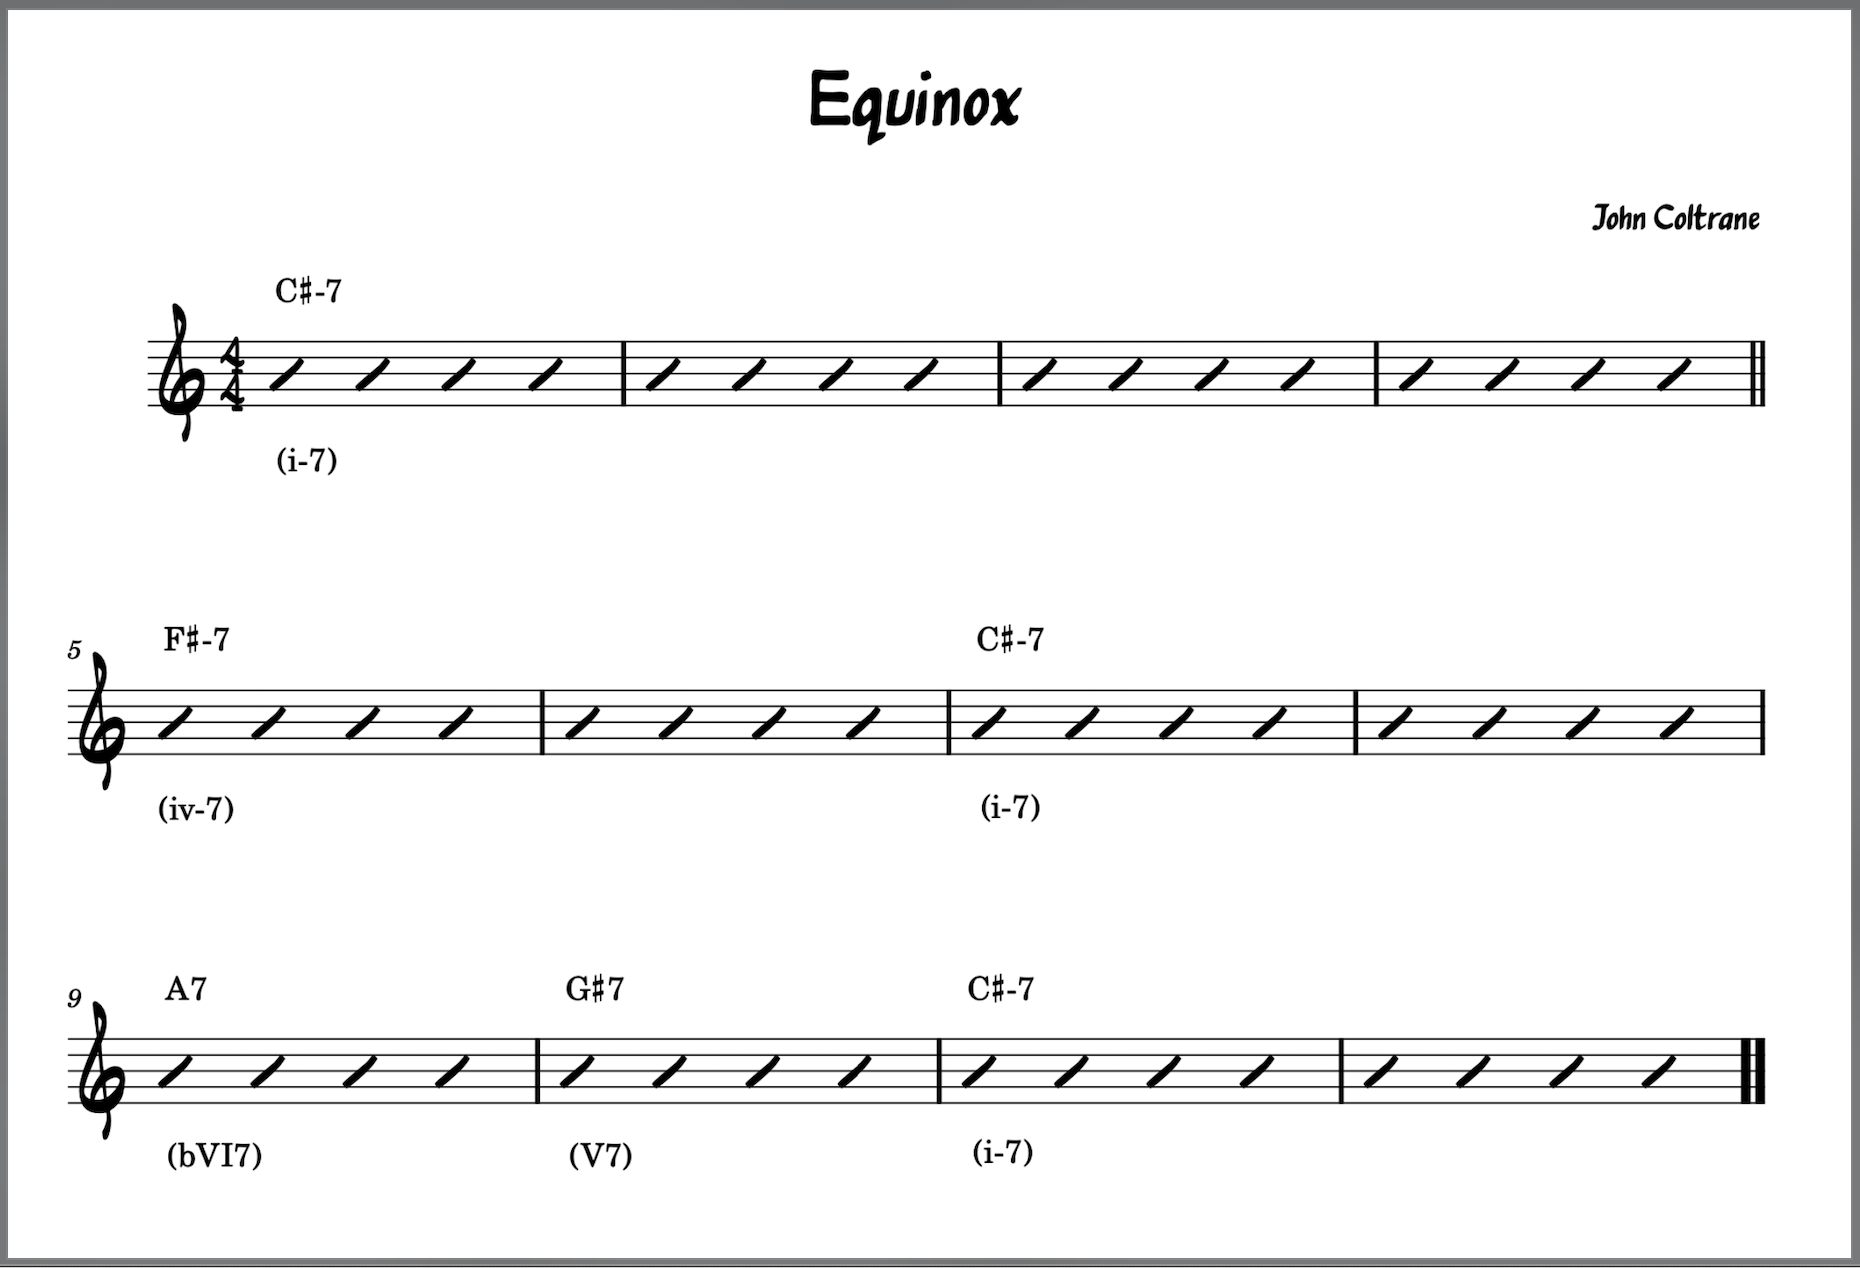 Blues Chords: Lead sheet for Equinox by John Coltrane